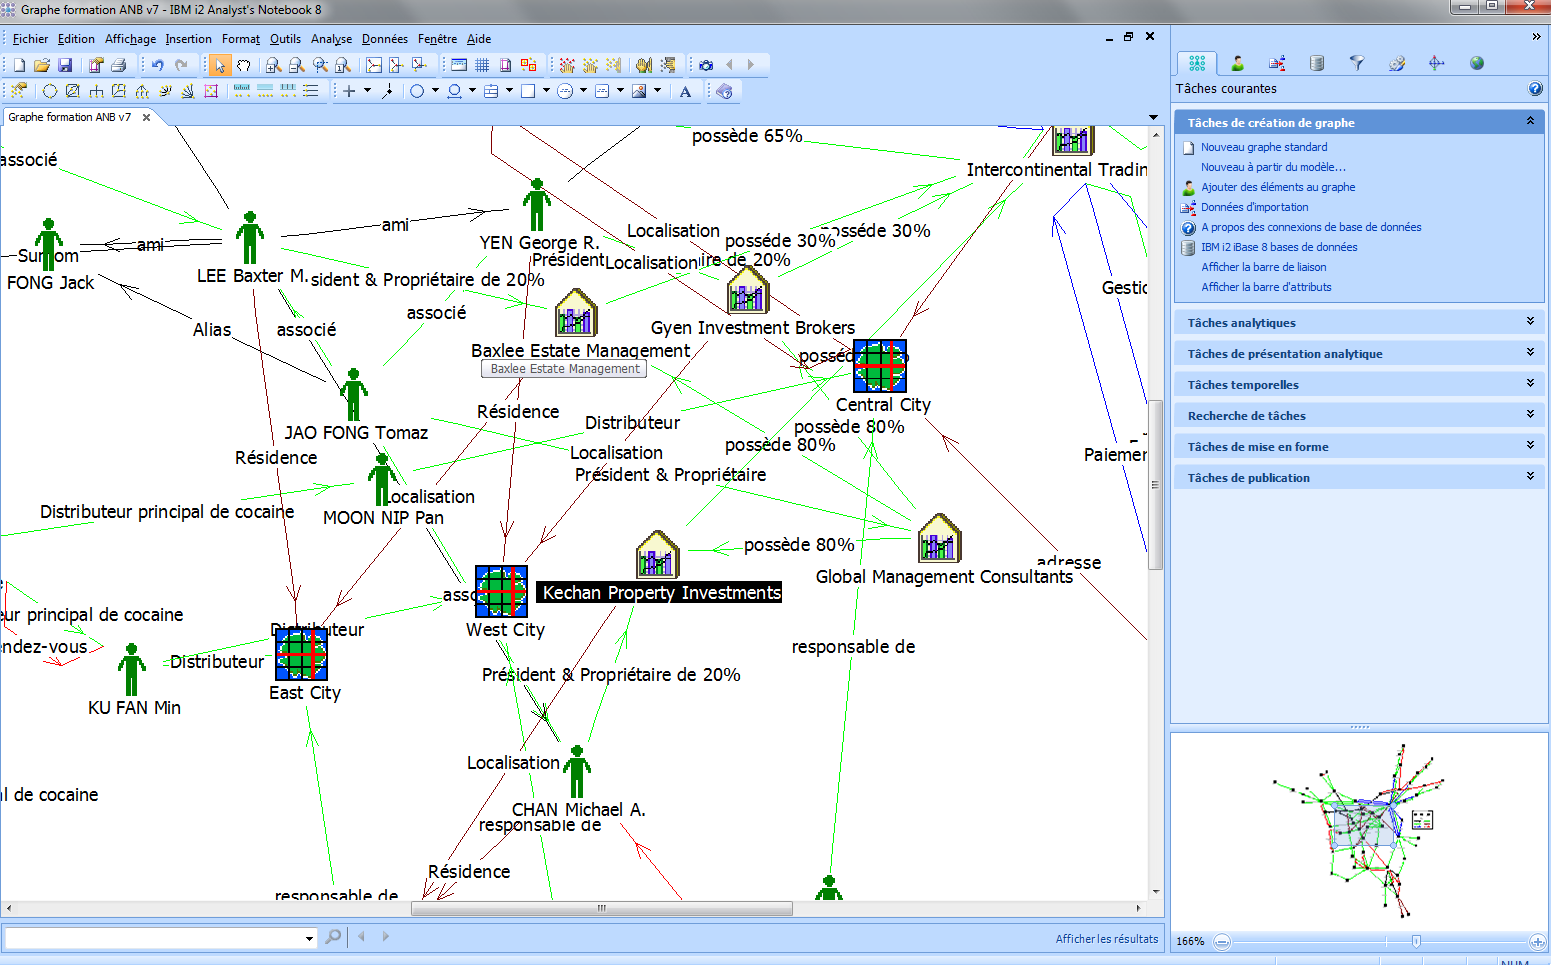 Example of Network Analysis using IBM i2 Analyst's Notebook